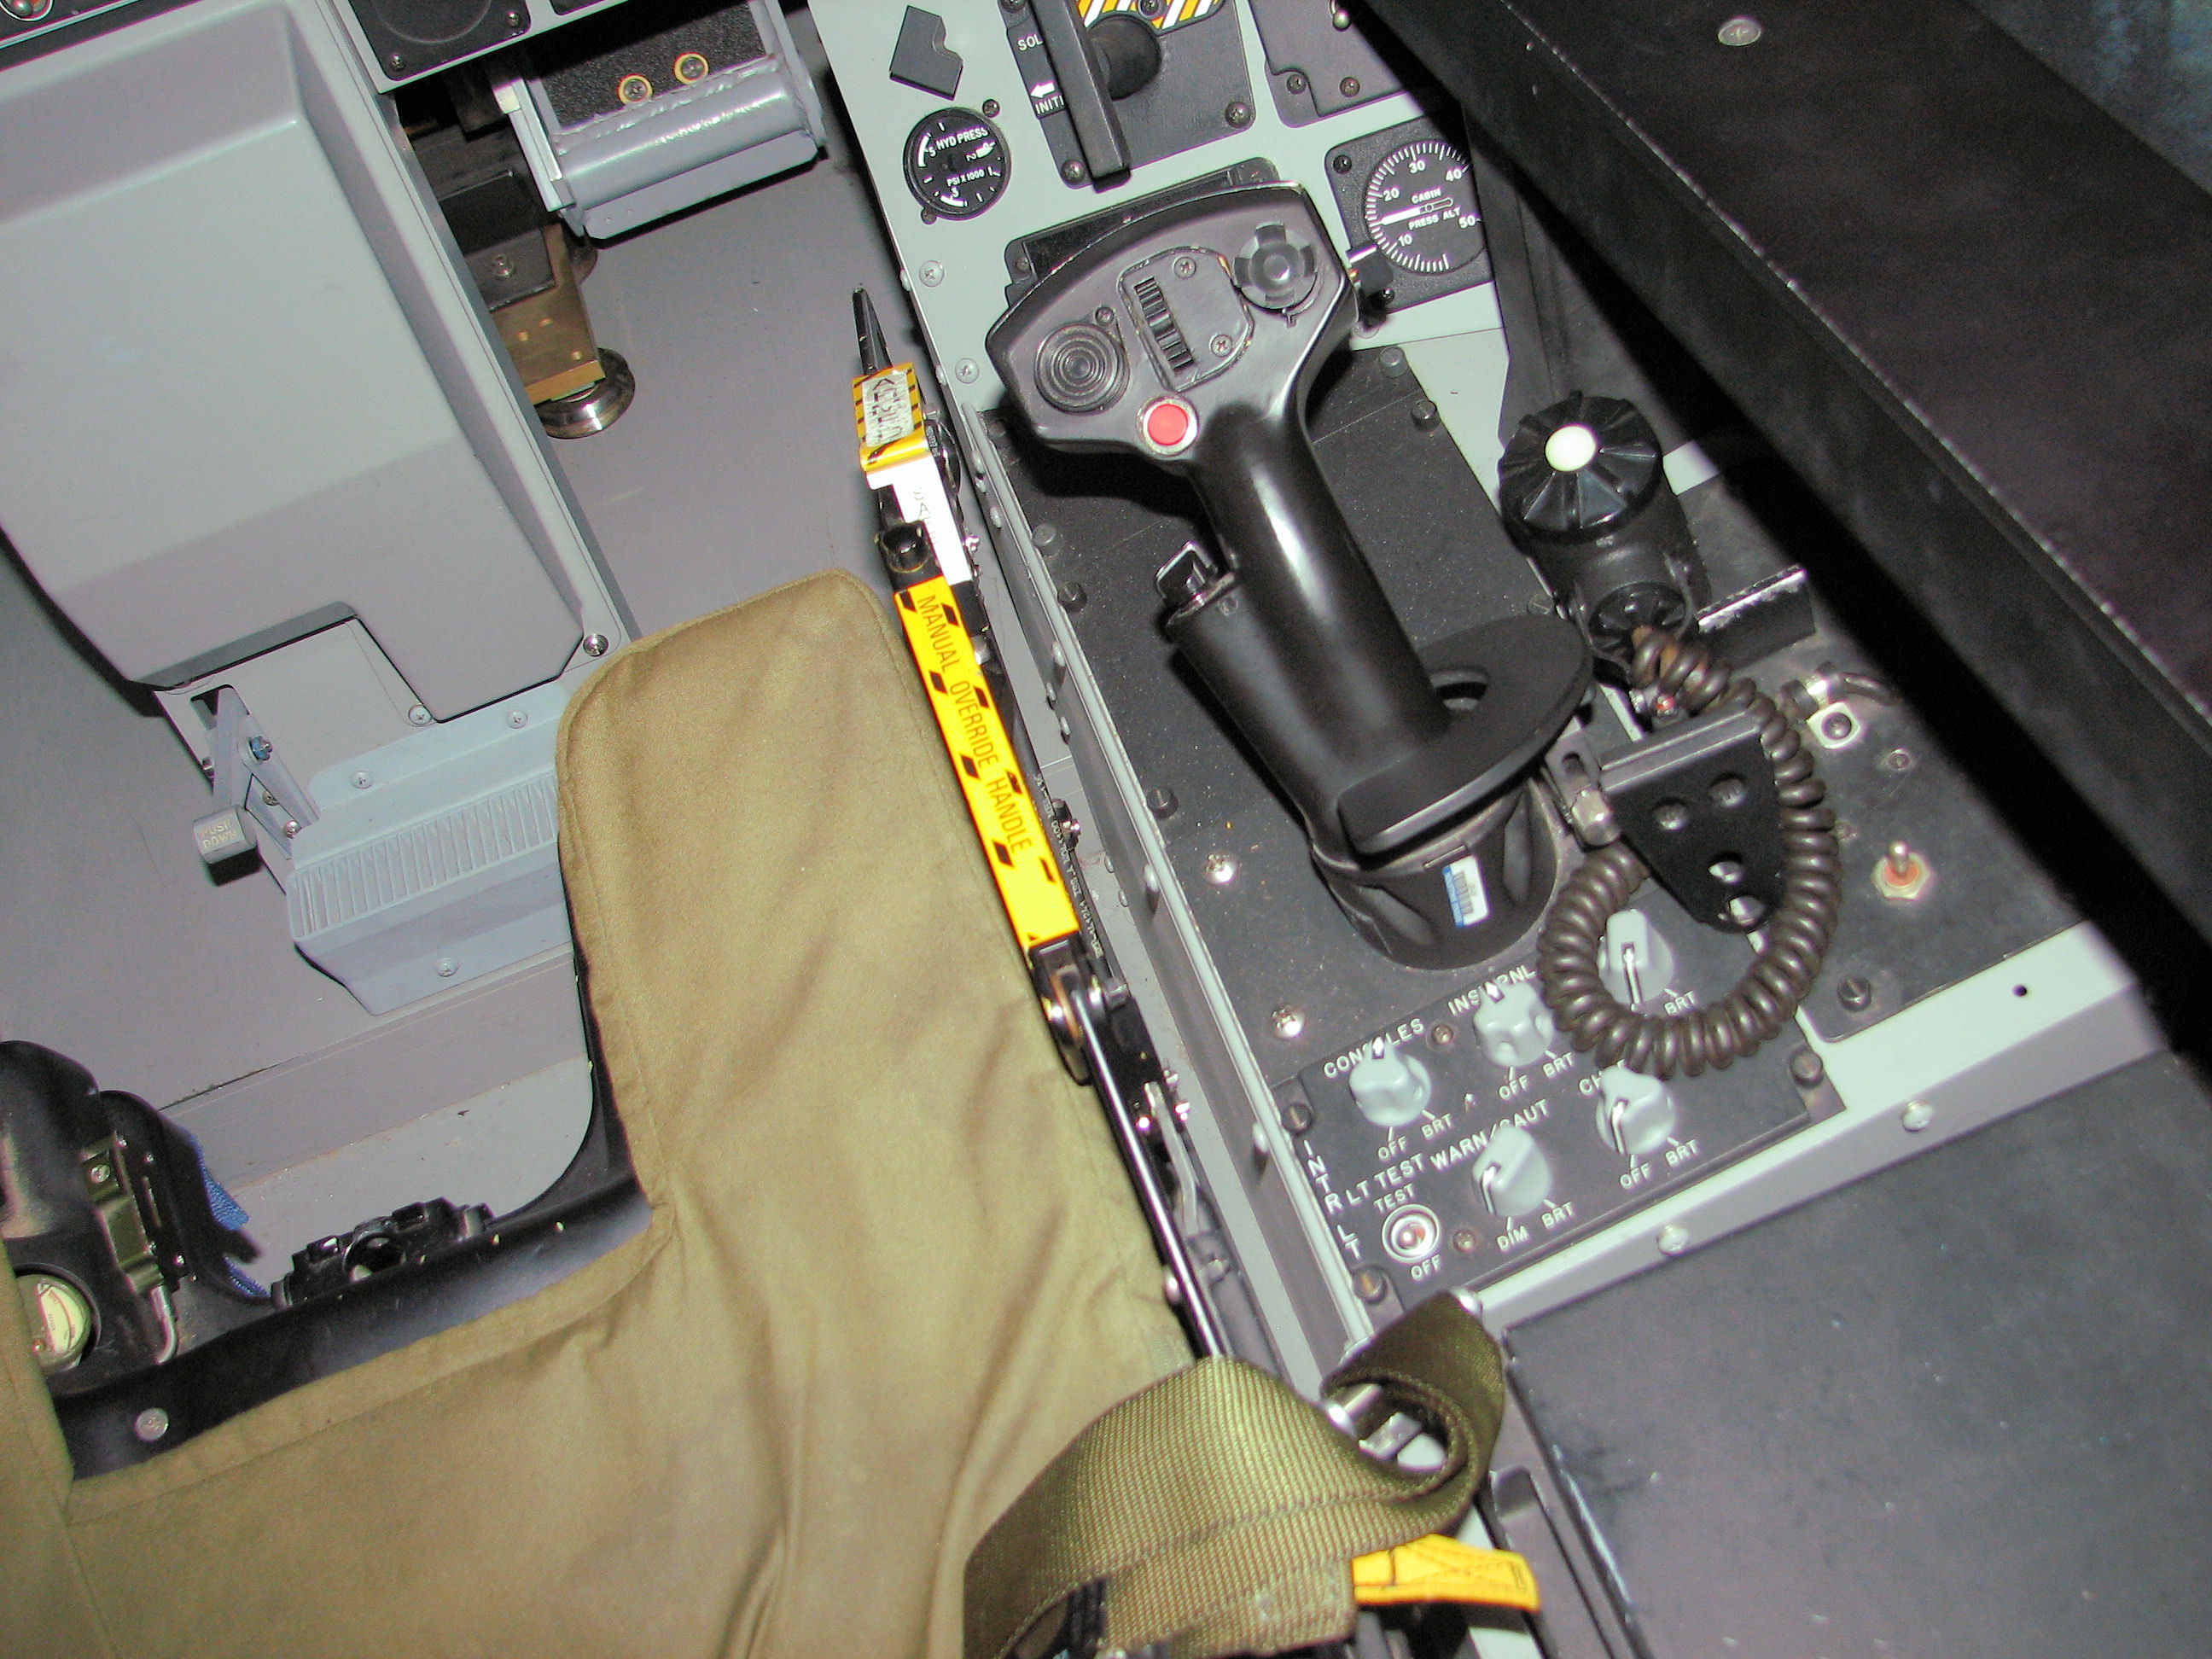 ea 18g growler cockpit